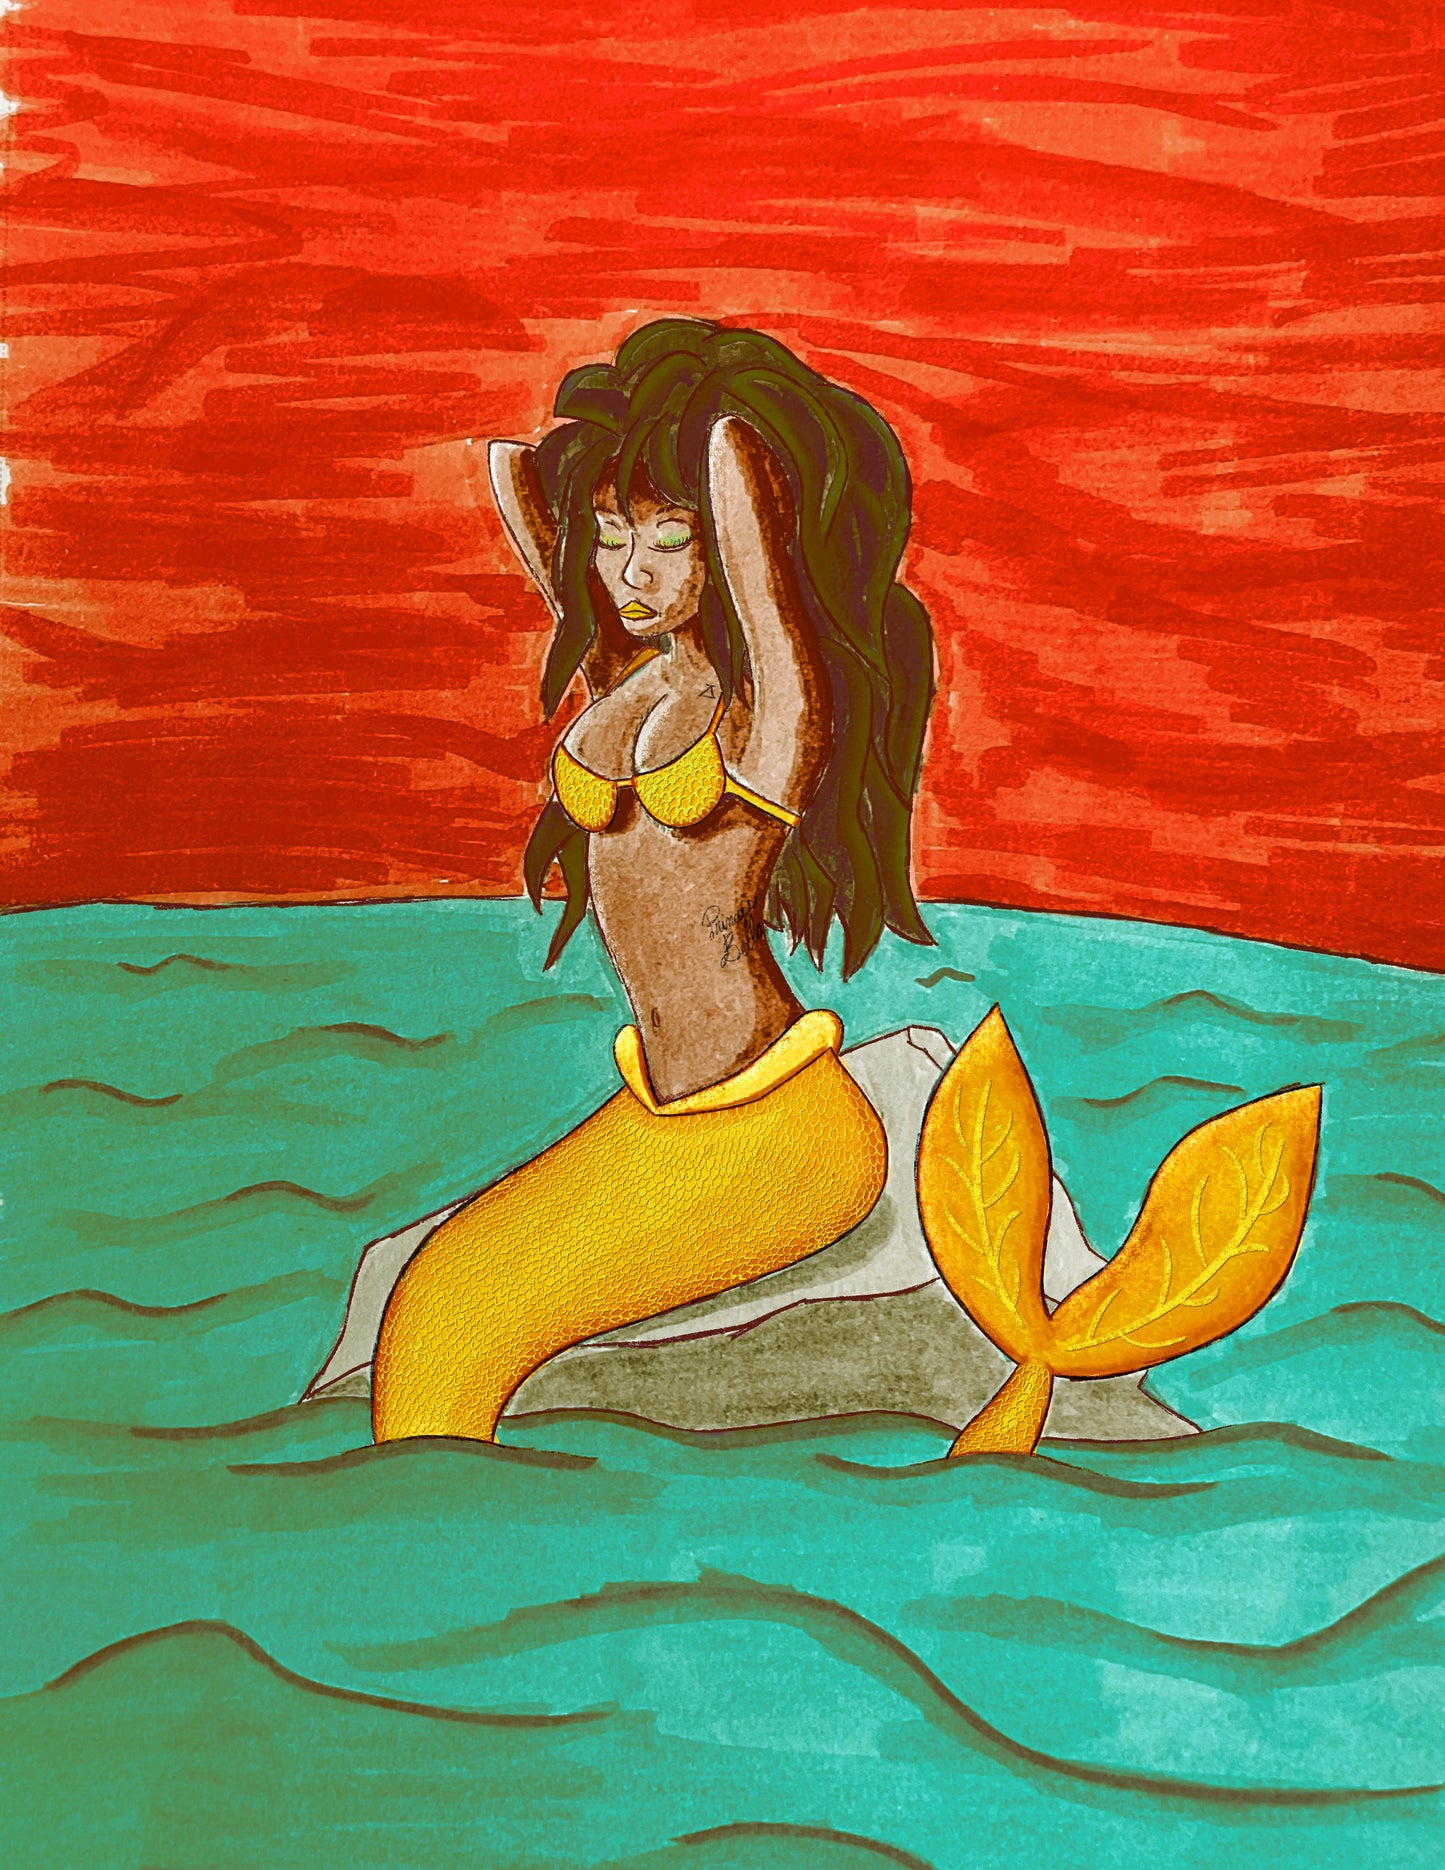 lil mermaid